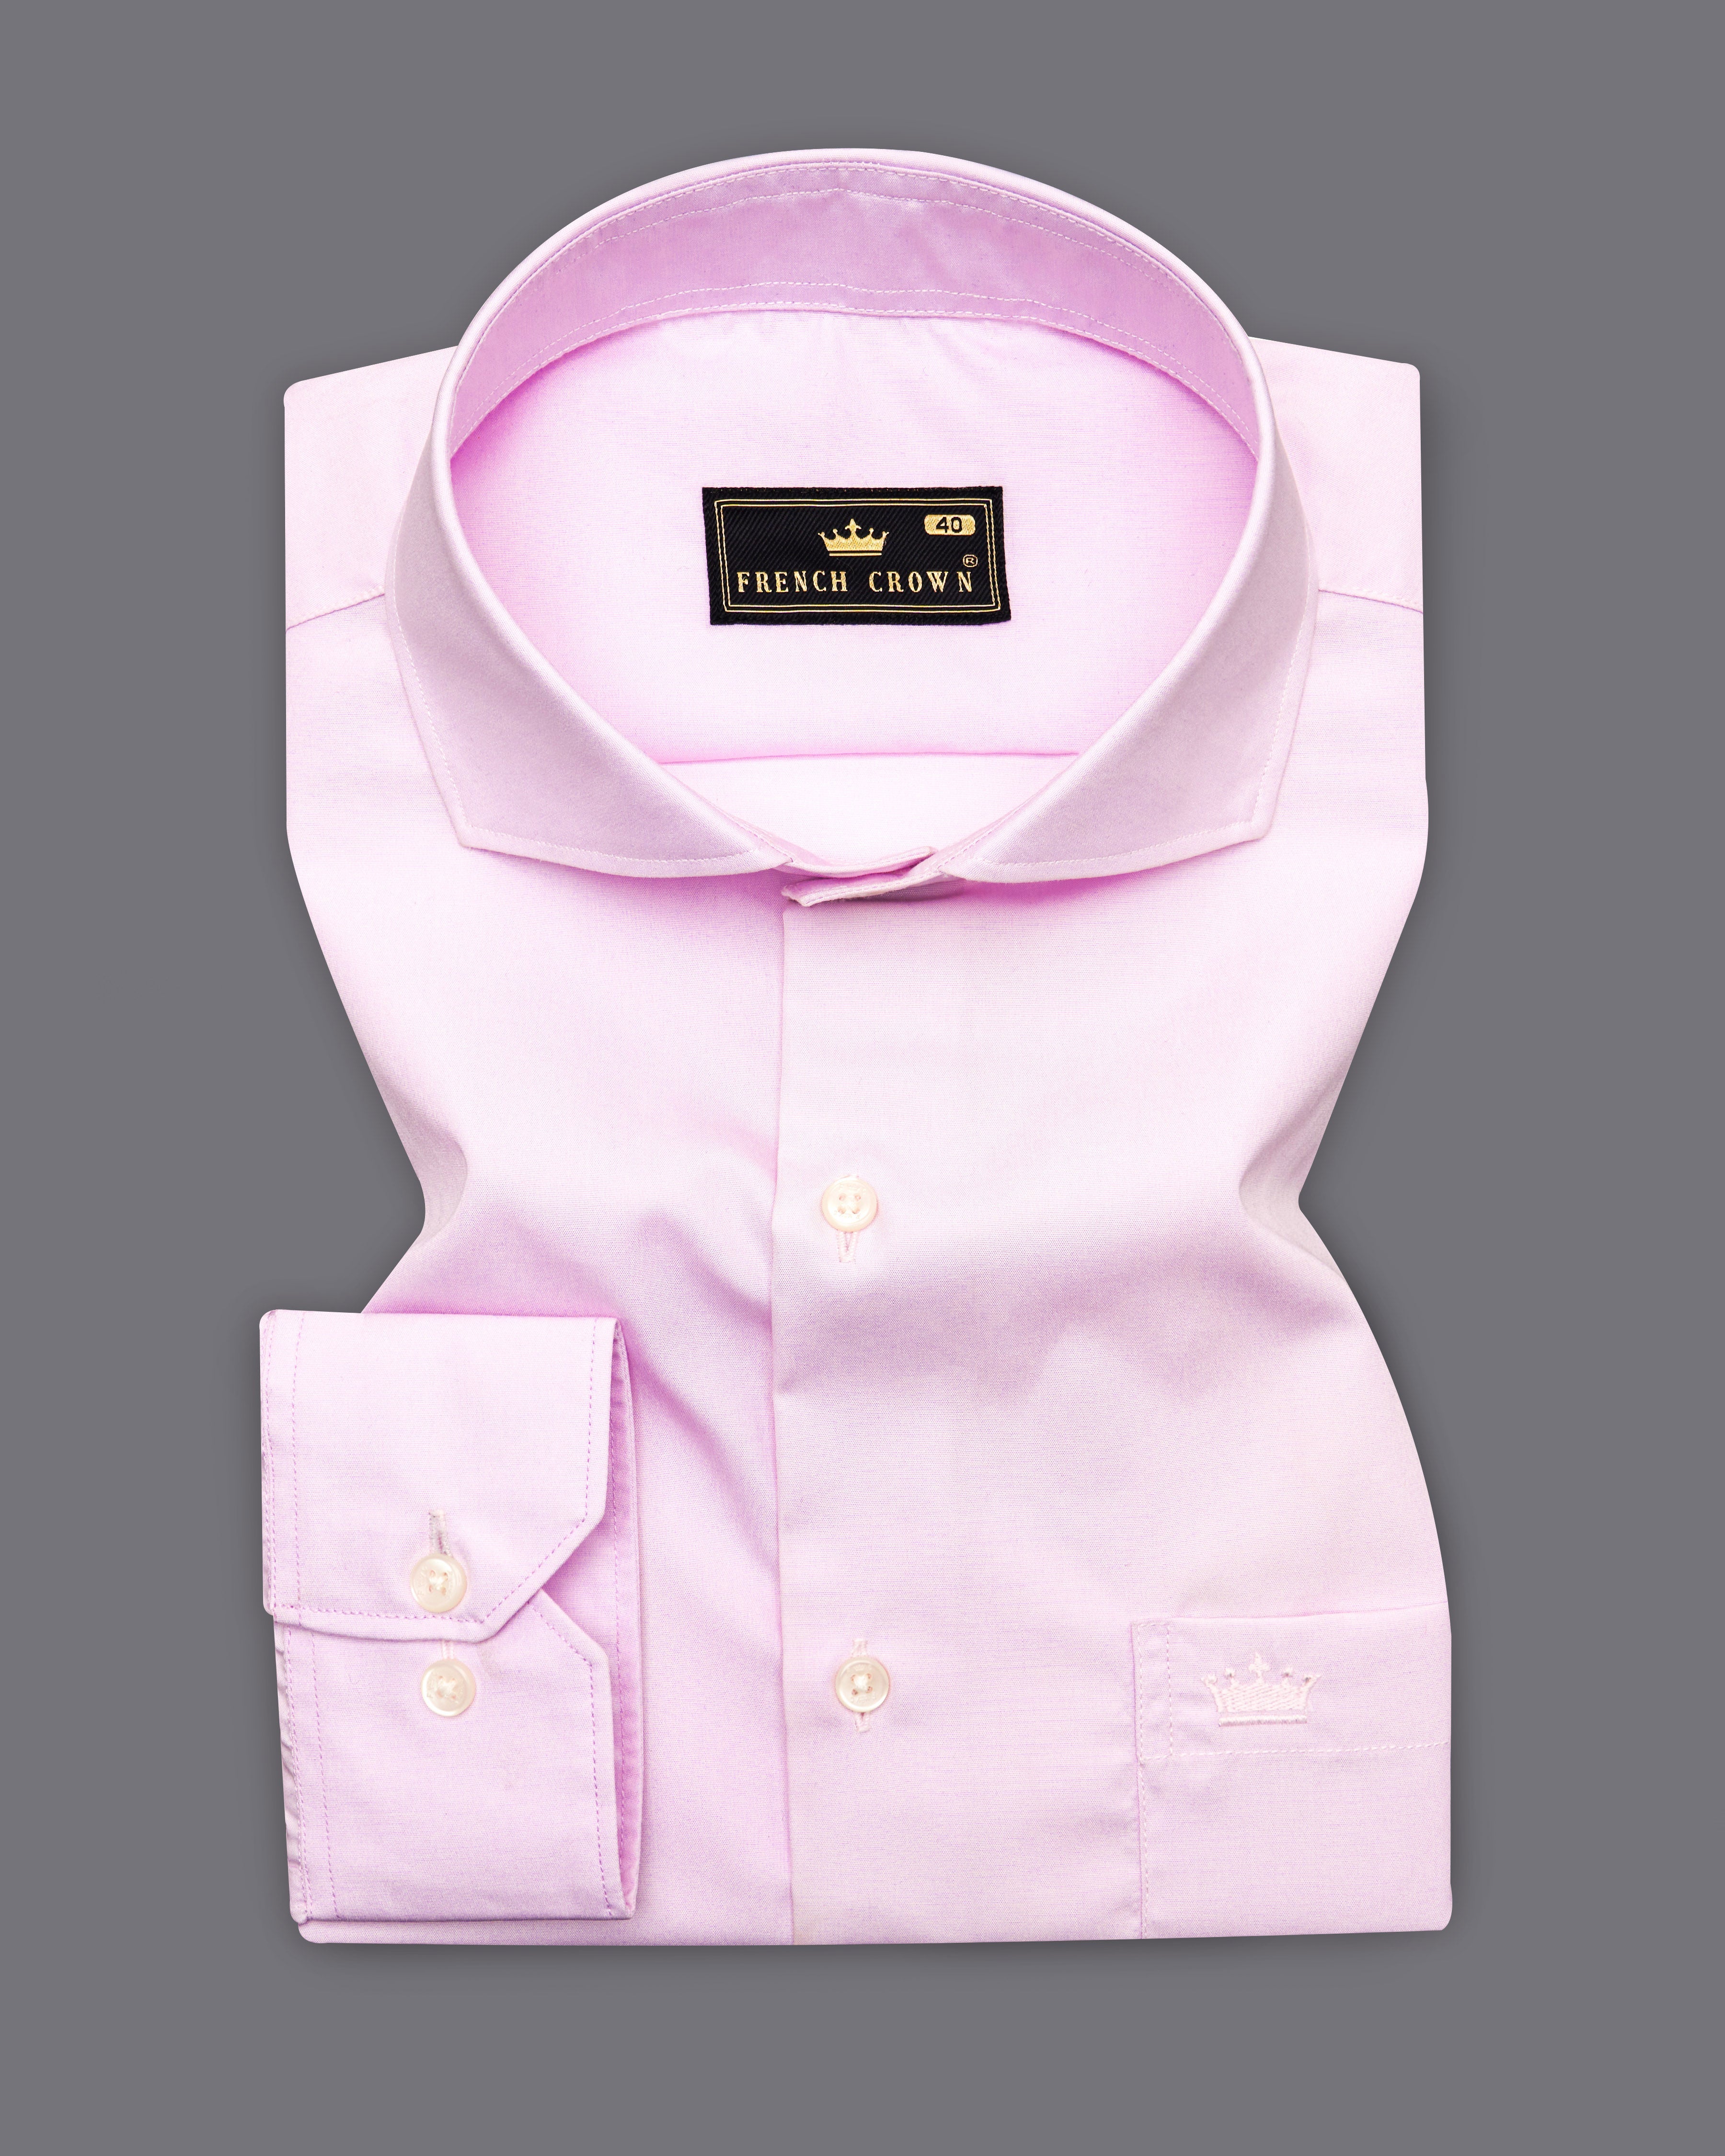 Melanie Pink Premium Cotton Shirt 9753-CA-P444-38, 9753-CA-P444-H-38, 9753-CA-P444-39, 9753-CA-P444-H-39, 9753-CA-P444-40, 9753-CA-P444-H-40, 9753-CA-P444-42, 9753-CA-P444-H-42, 9753-CA-P444-44, 9753-CA-P444-H-44, 9753-CA-P444-46, 9753-CA-P444-H-46, 9753-CA-P444-48, 9753-CA-P444-H-48, 9753-CA-P444-50, 9753-CA-P444-H-50, 9753-CA-P444-52, 9753-CA-P444-H-52